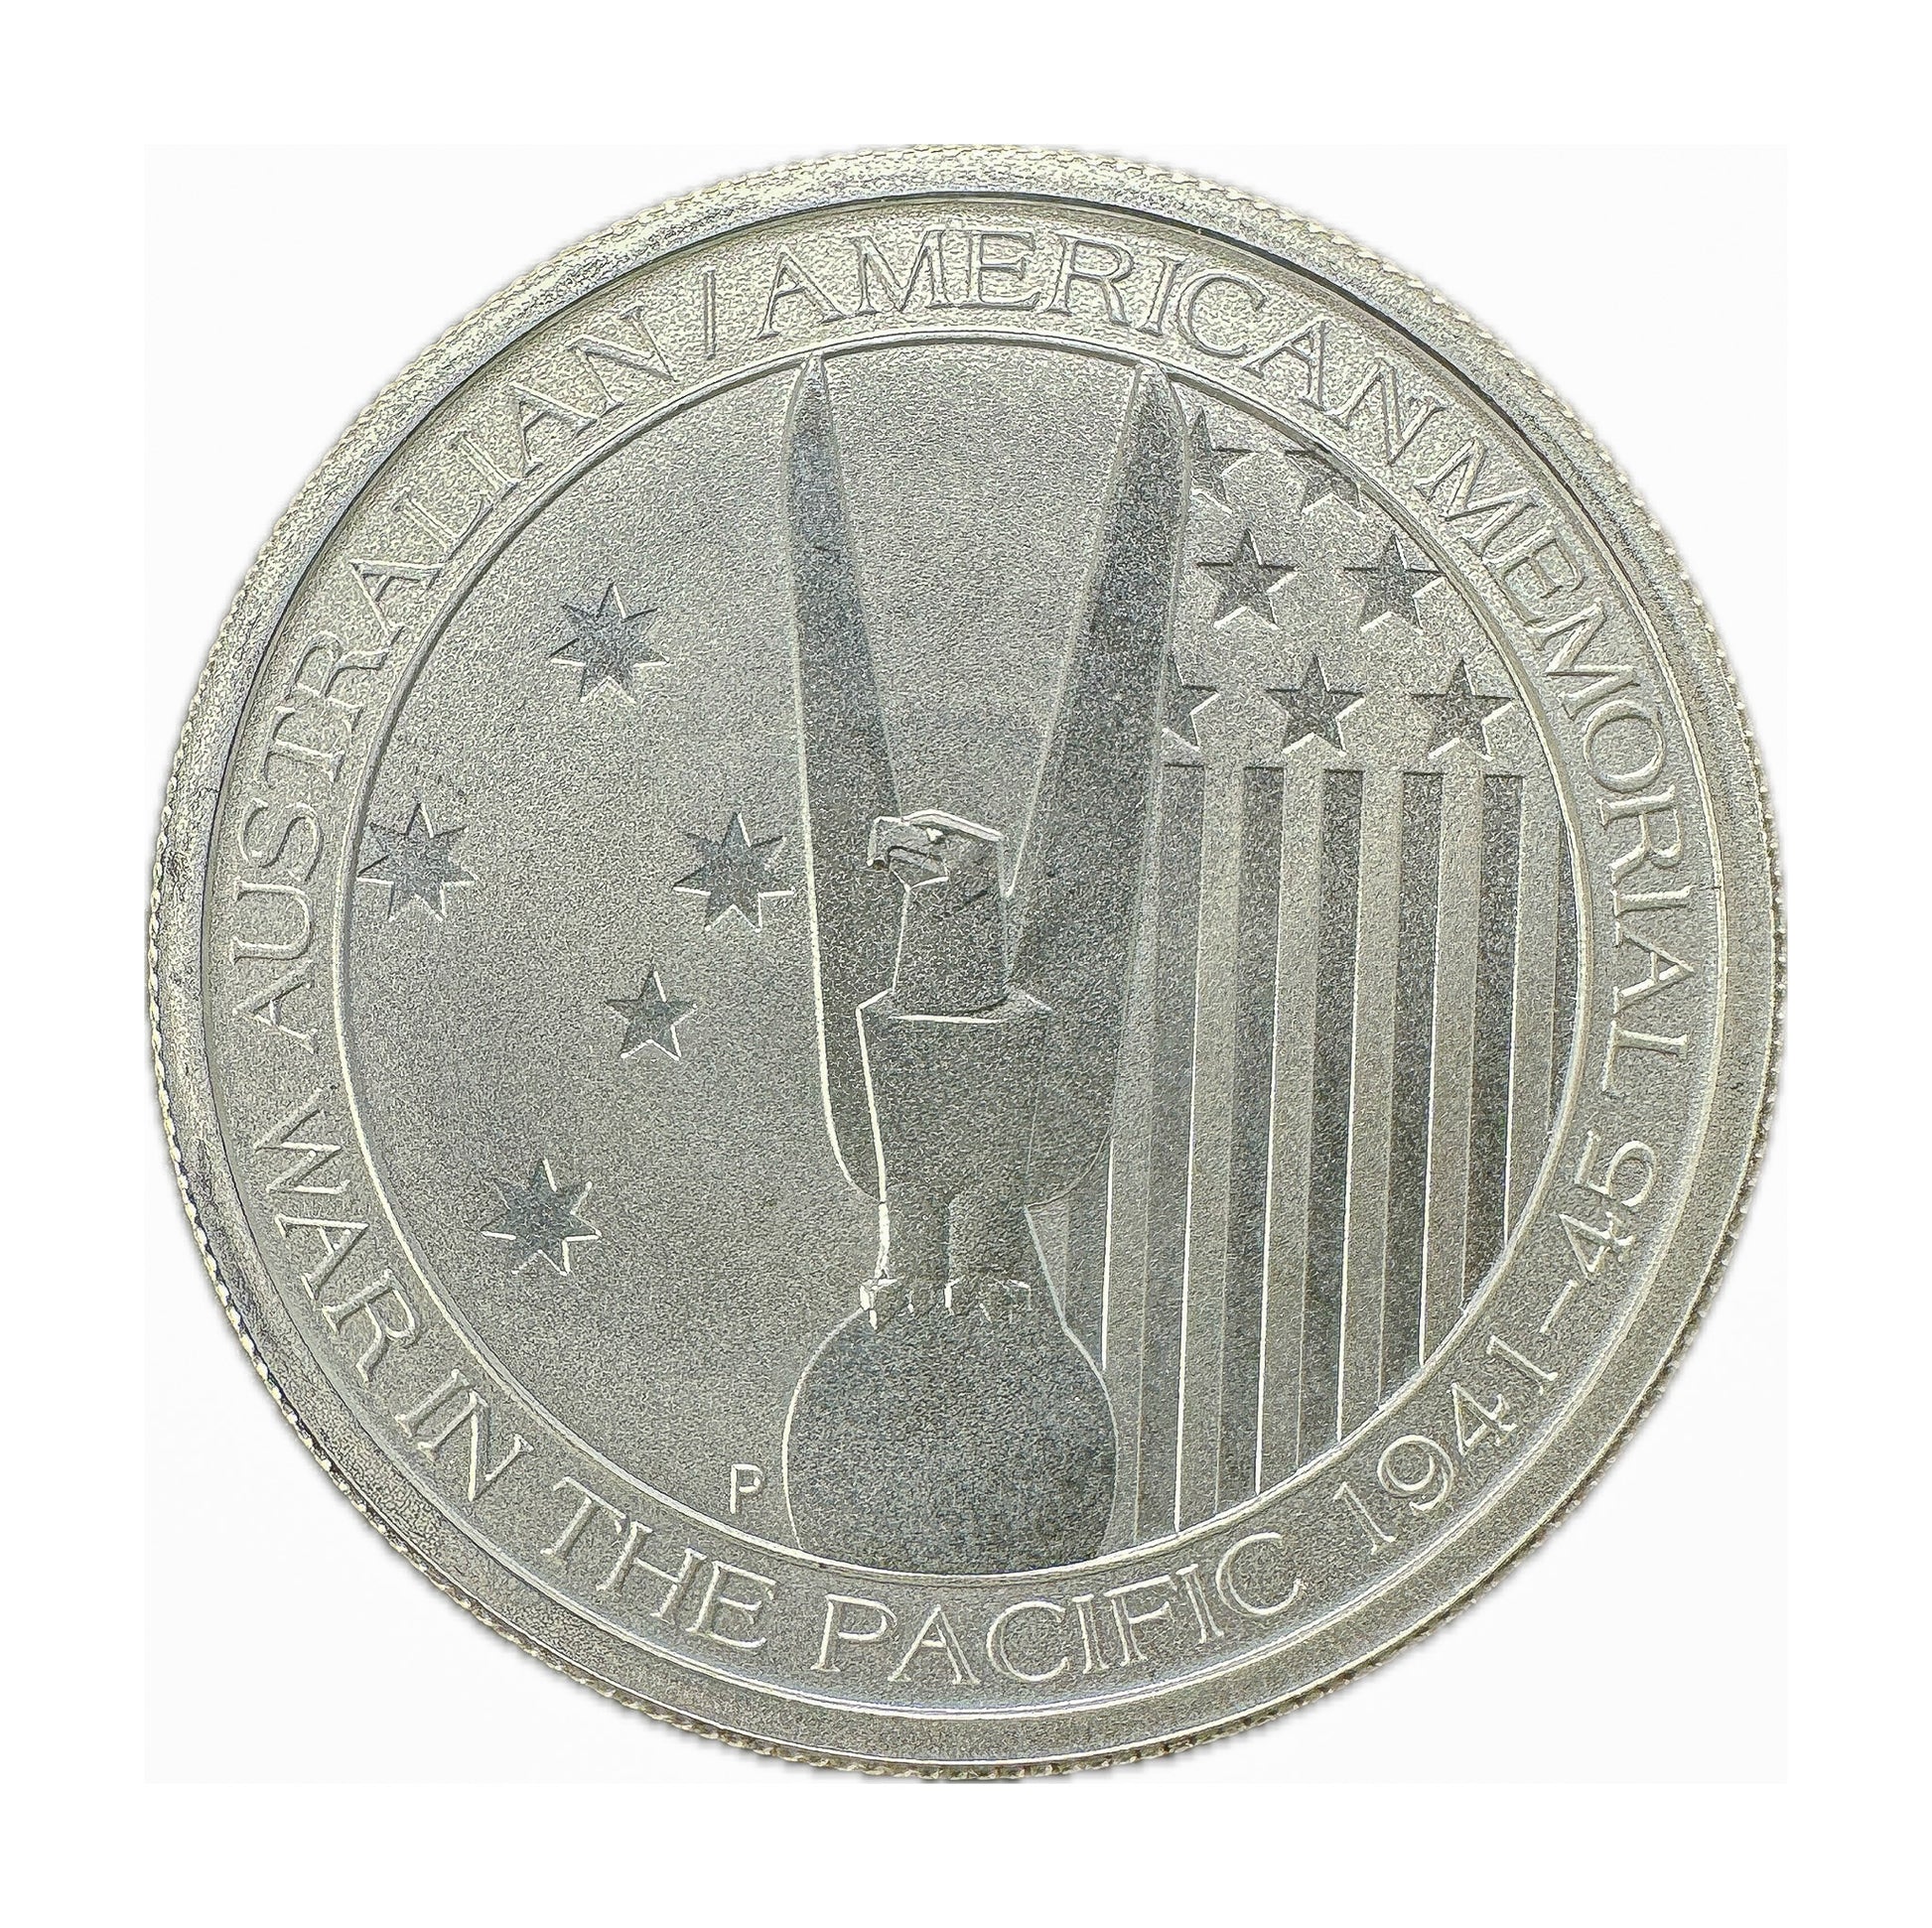 2013 Australian/American Memorial - War In The Pacific 1/2 oz Silver Coin - OZB